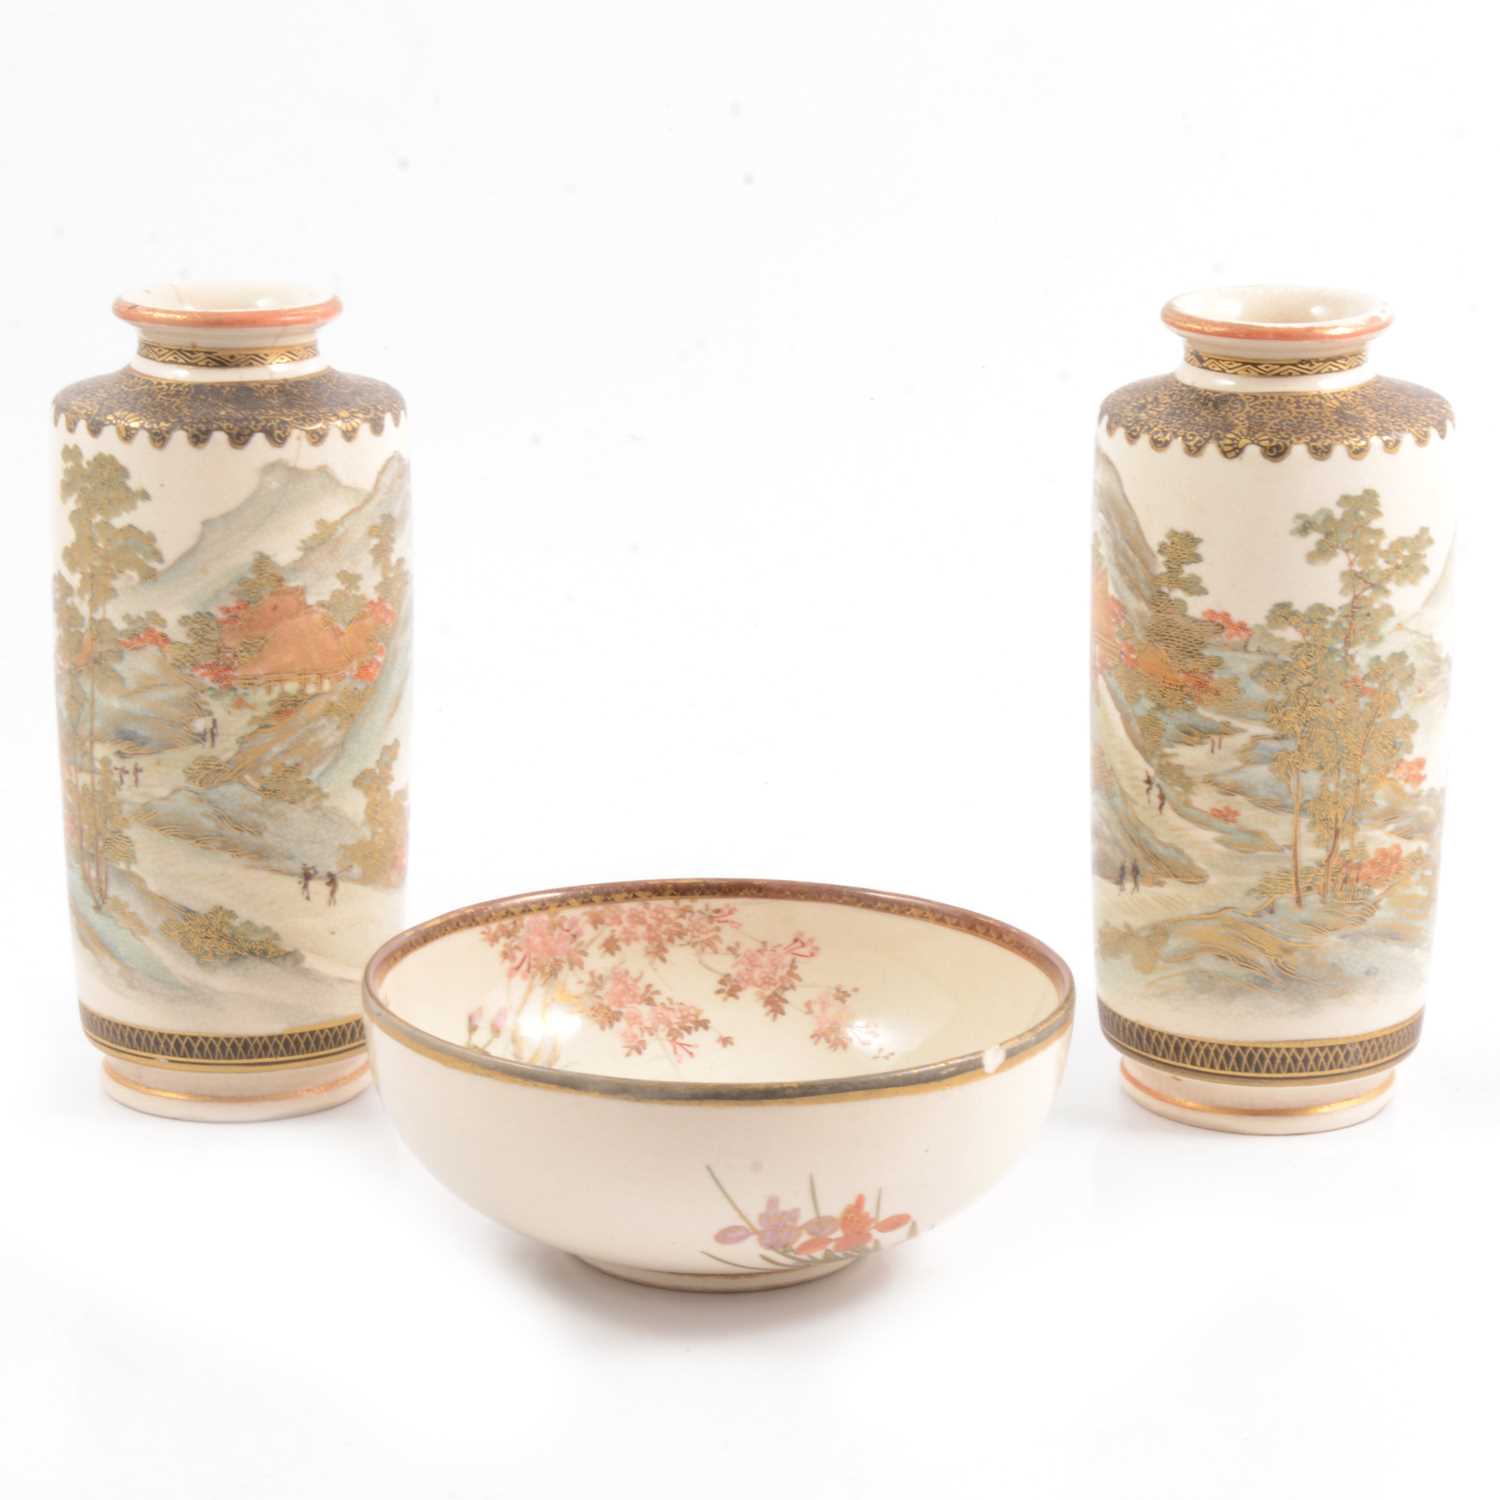 Lot 3 - Pair of Japanese Satsuma vases and a small bowl.